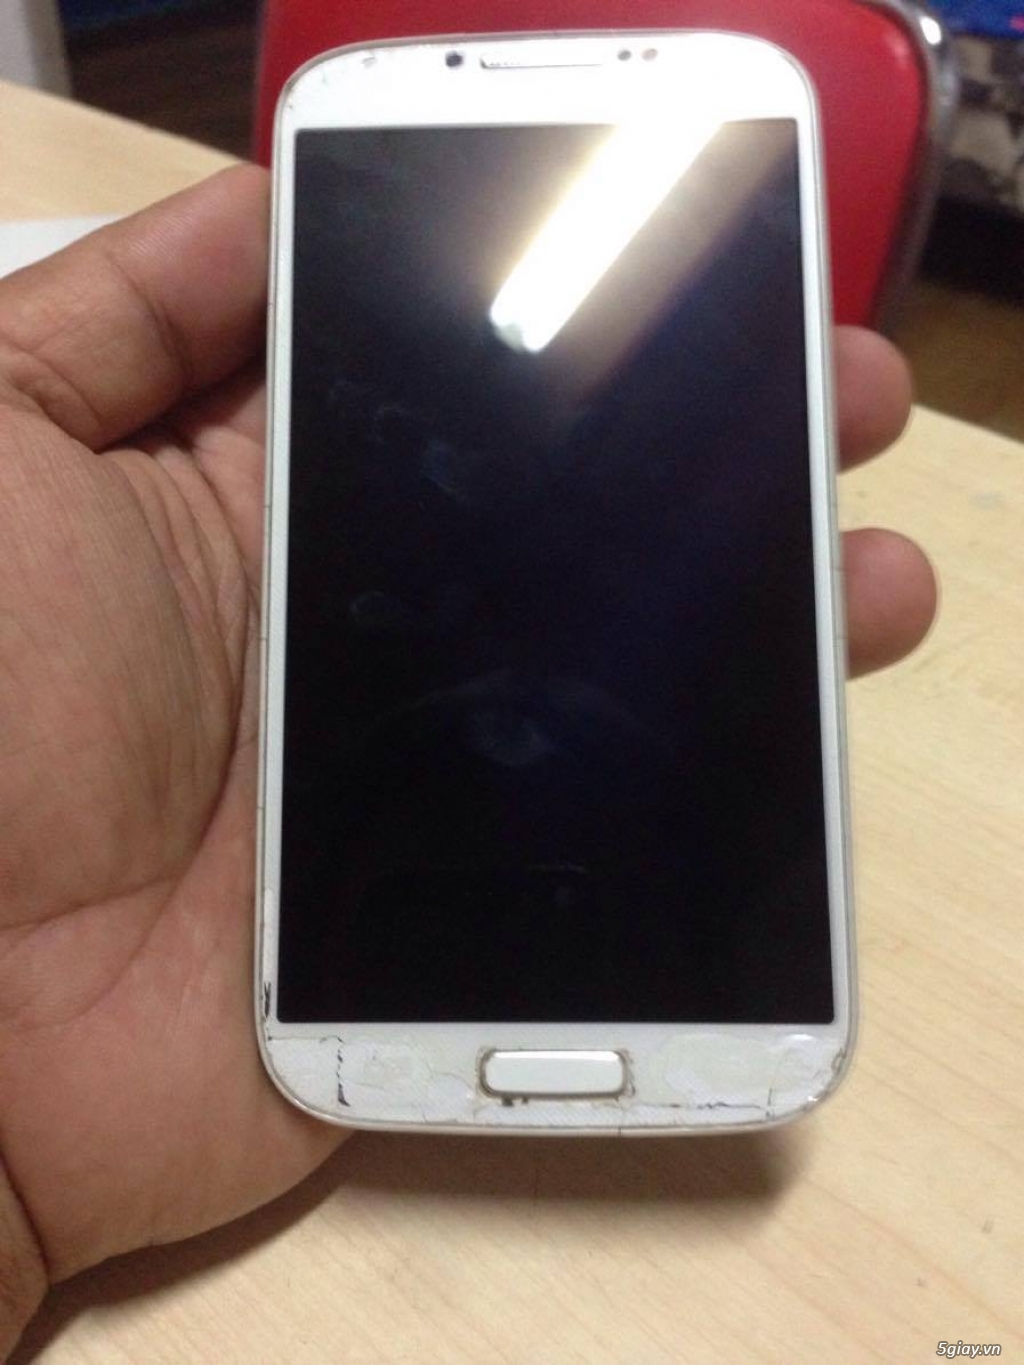 Sky A870 đen, Samsung galaxy S4 trắng